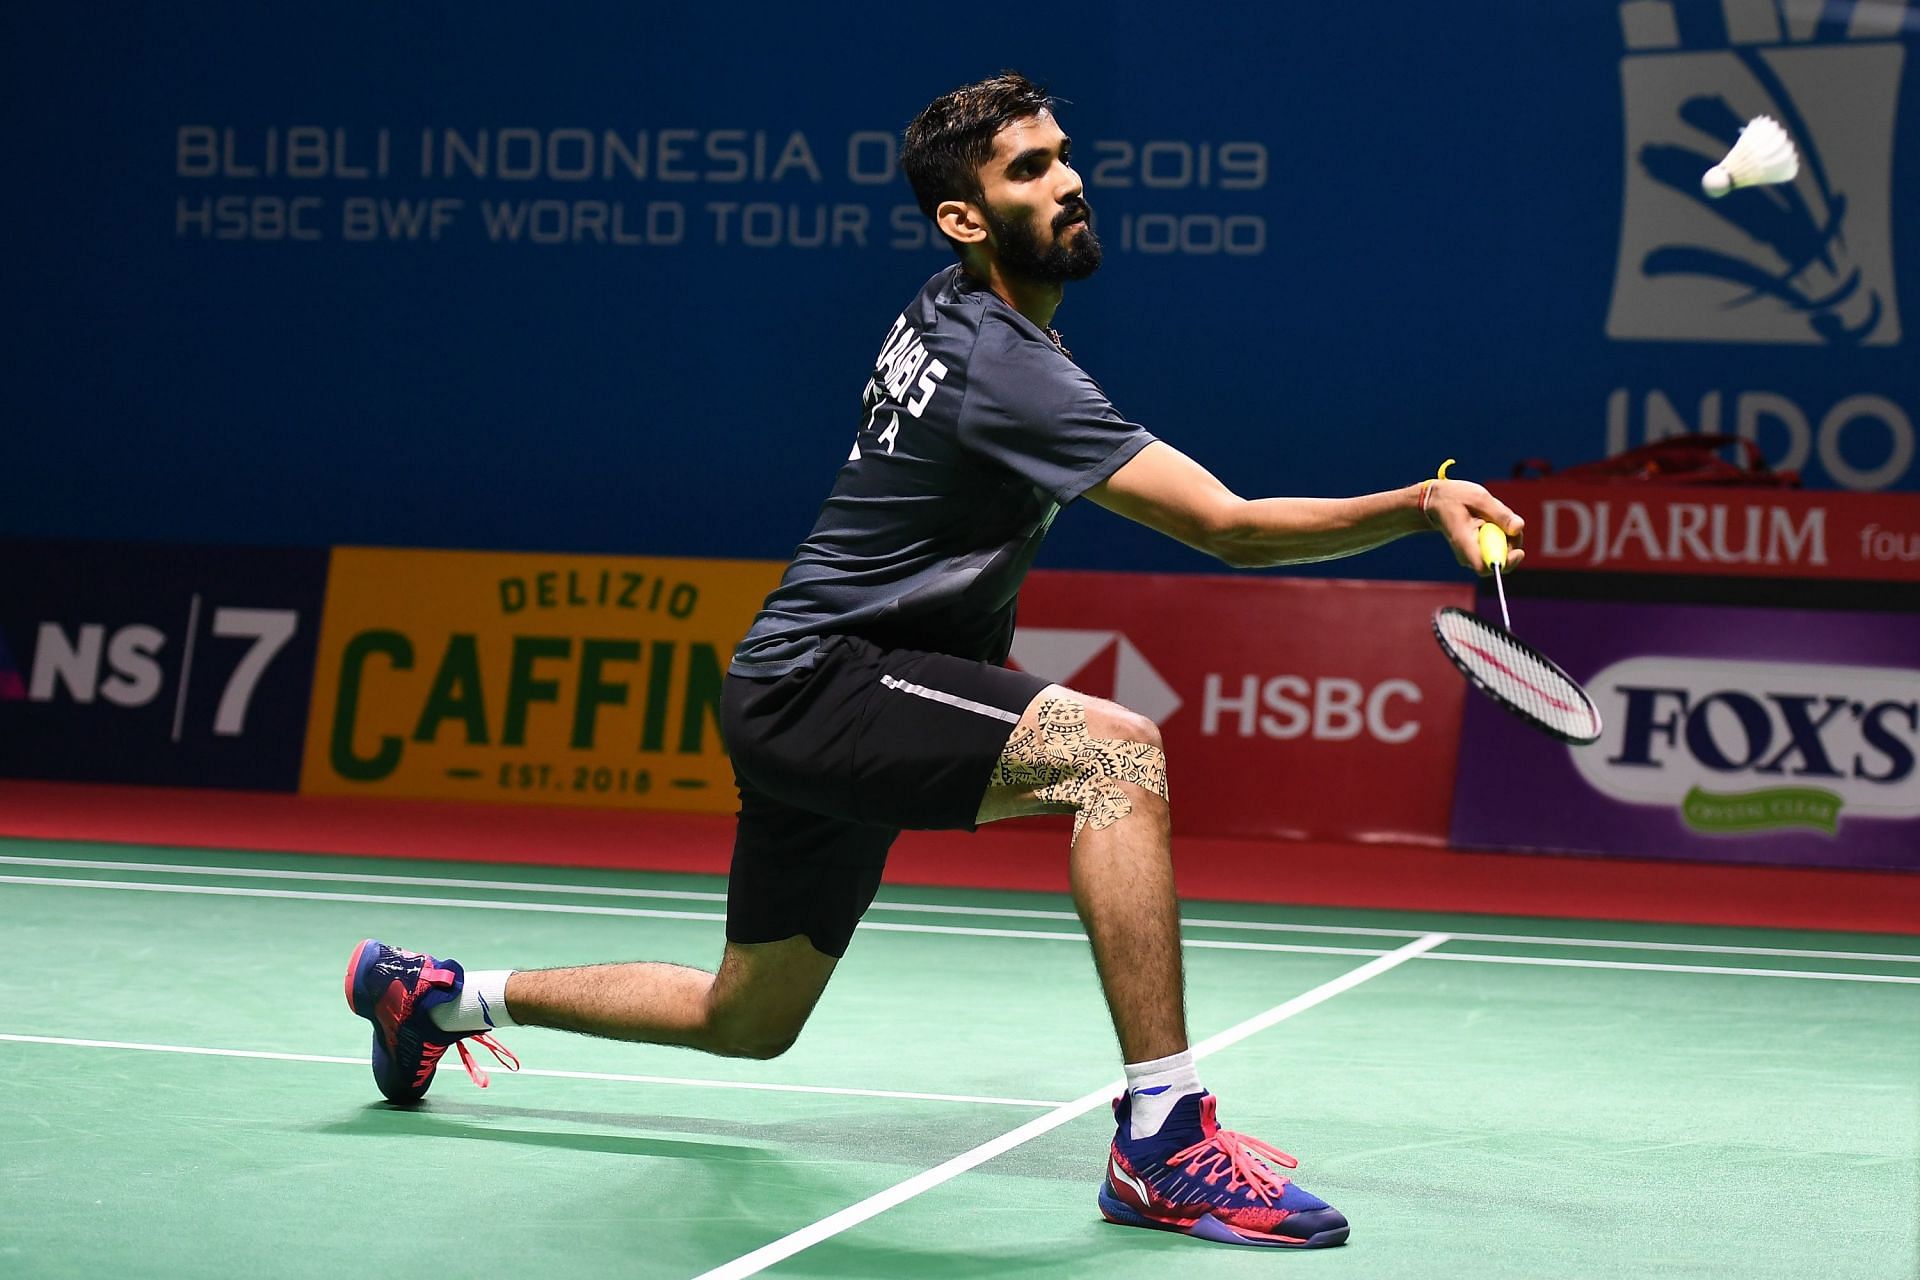 Kidambi Srikanth in action at the 2019 Bli Bli Indonesia Open